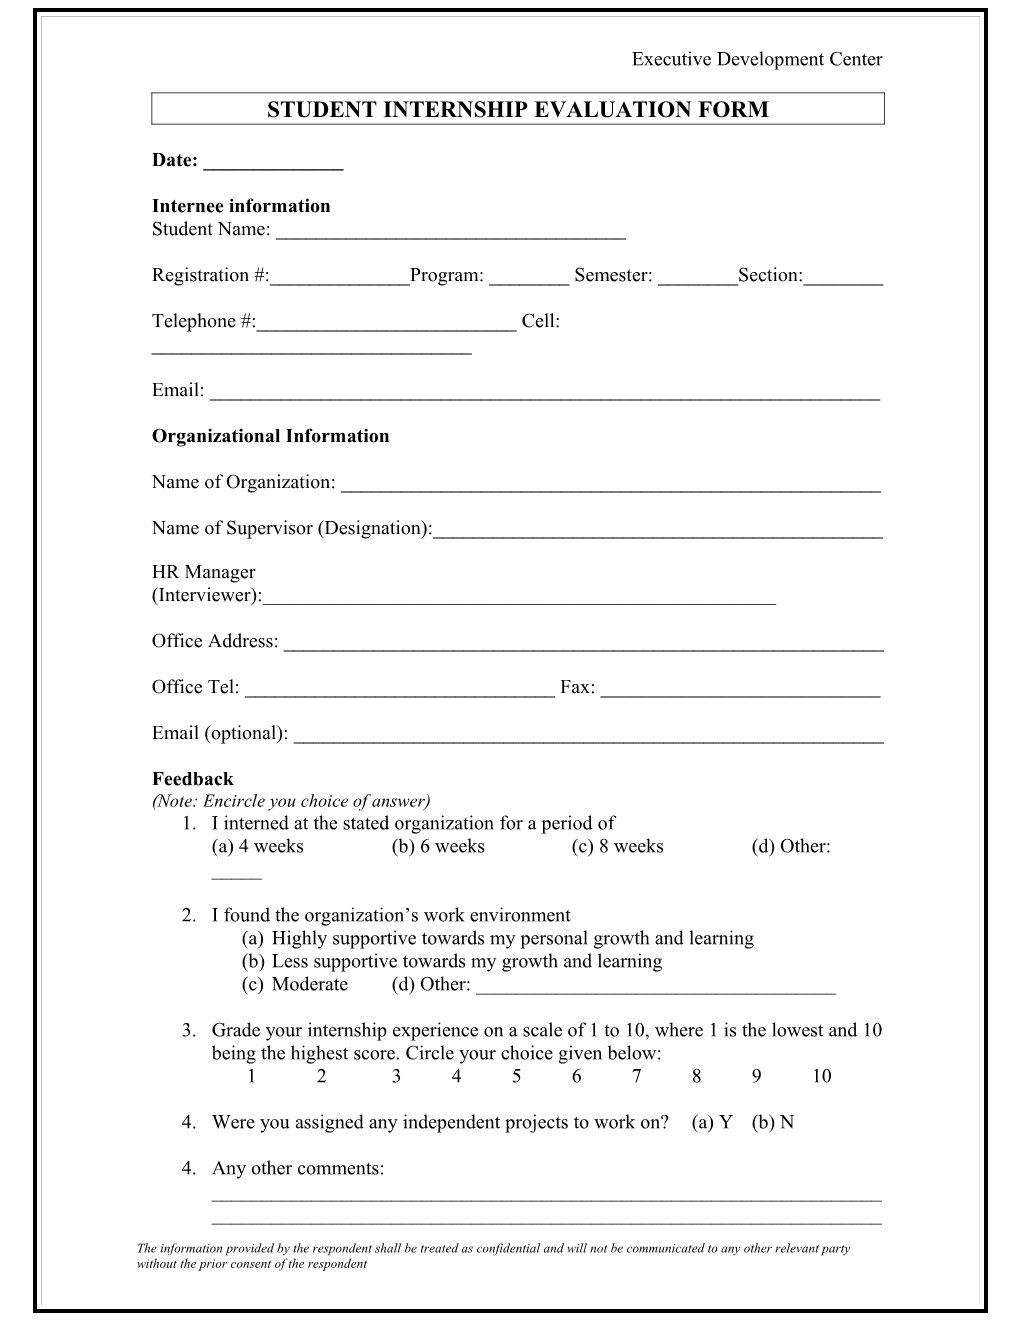 SZABIST Internship Evaluation Form